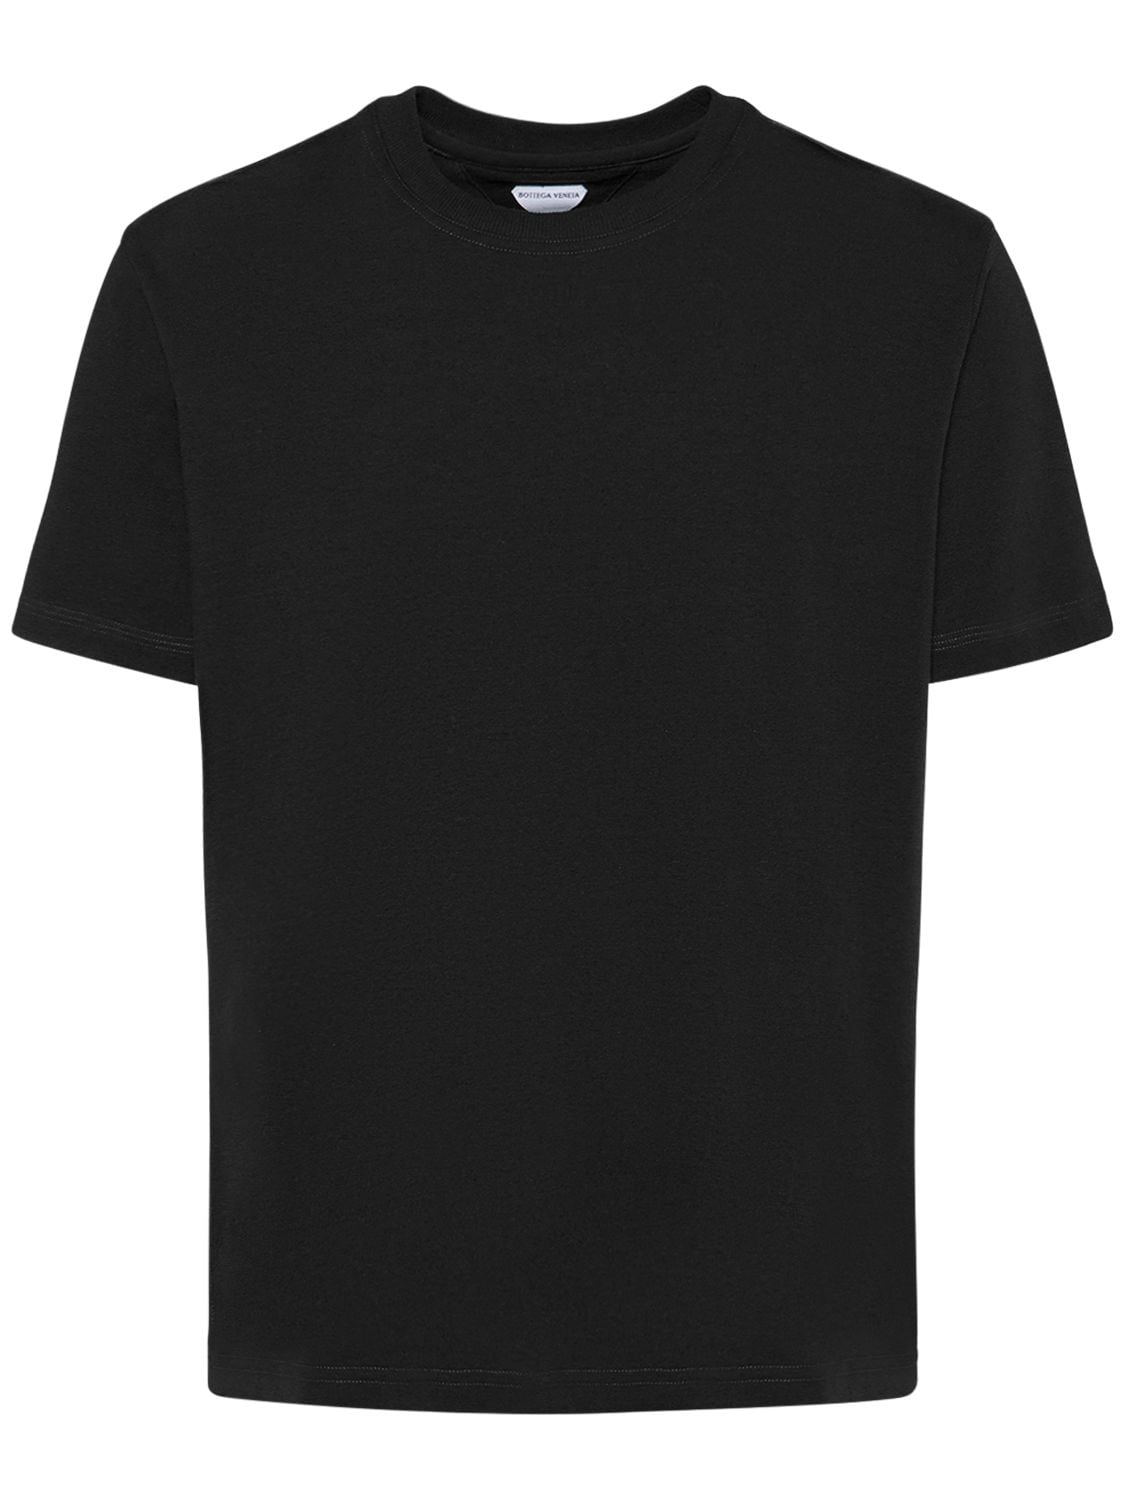 Image of Sunrise Light Cotton Jersey T-shirt